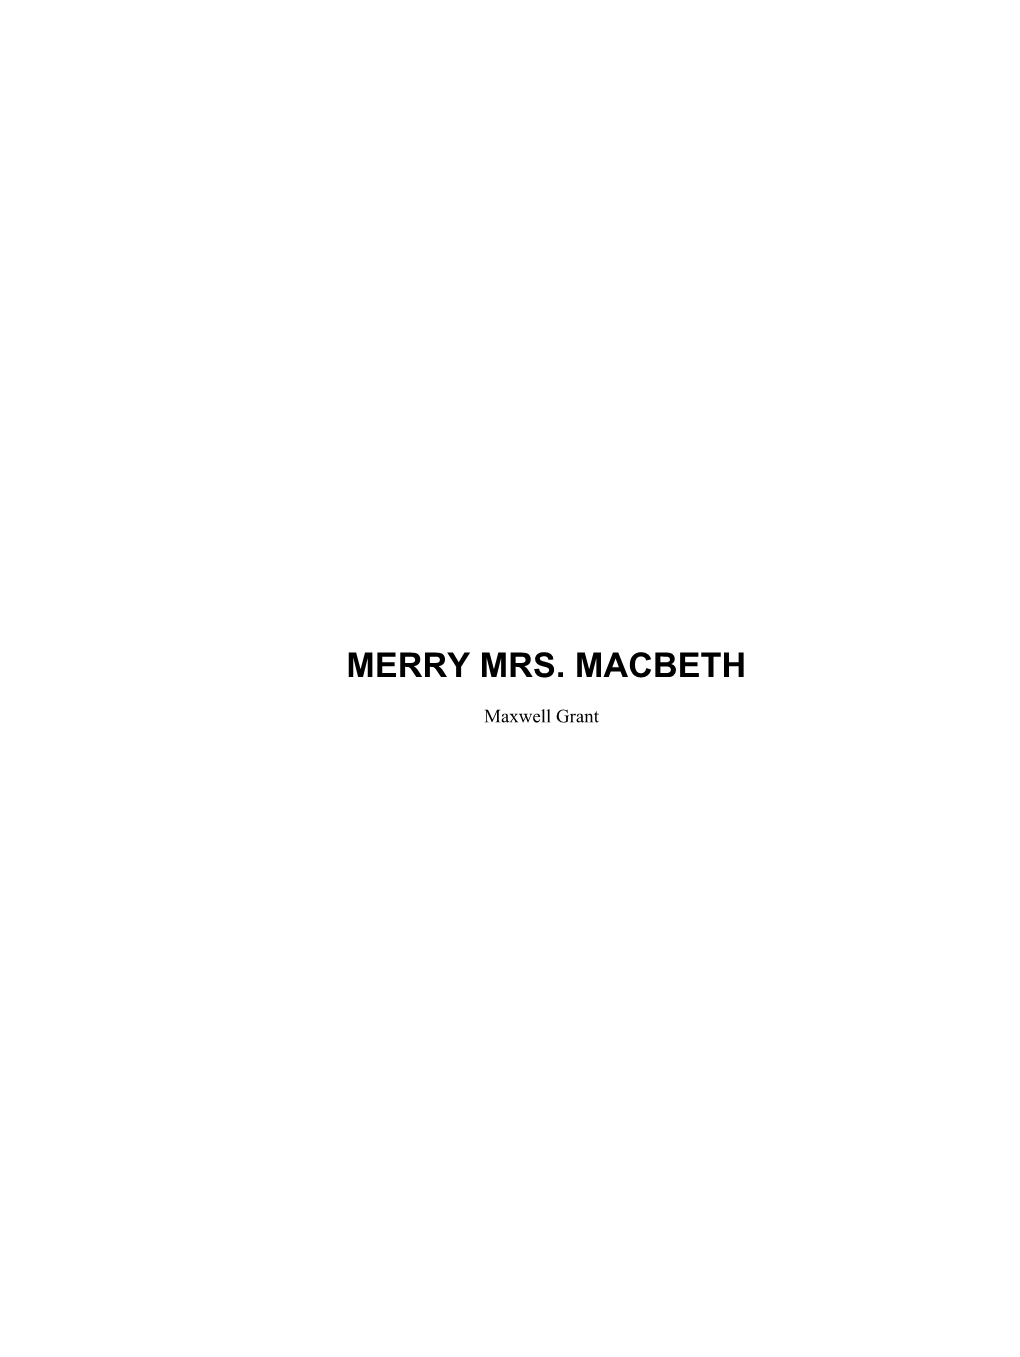 Merry Mrs. Macbeth